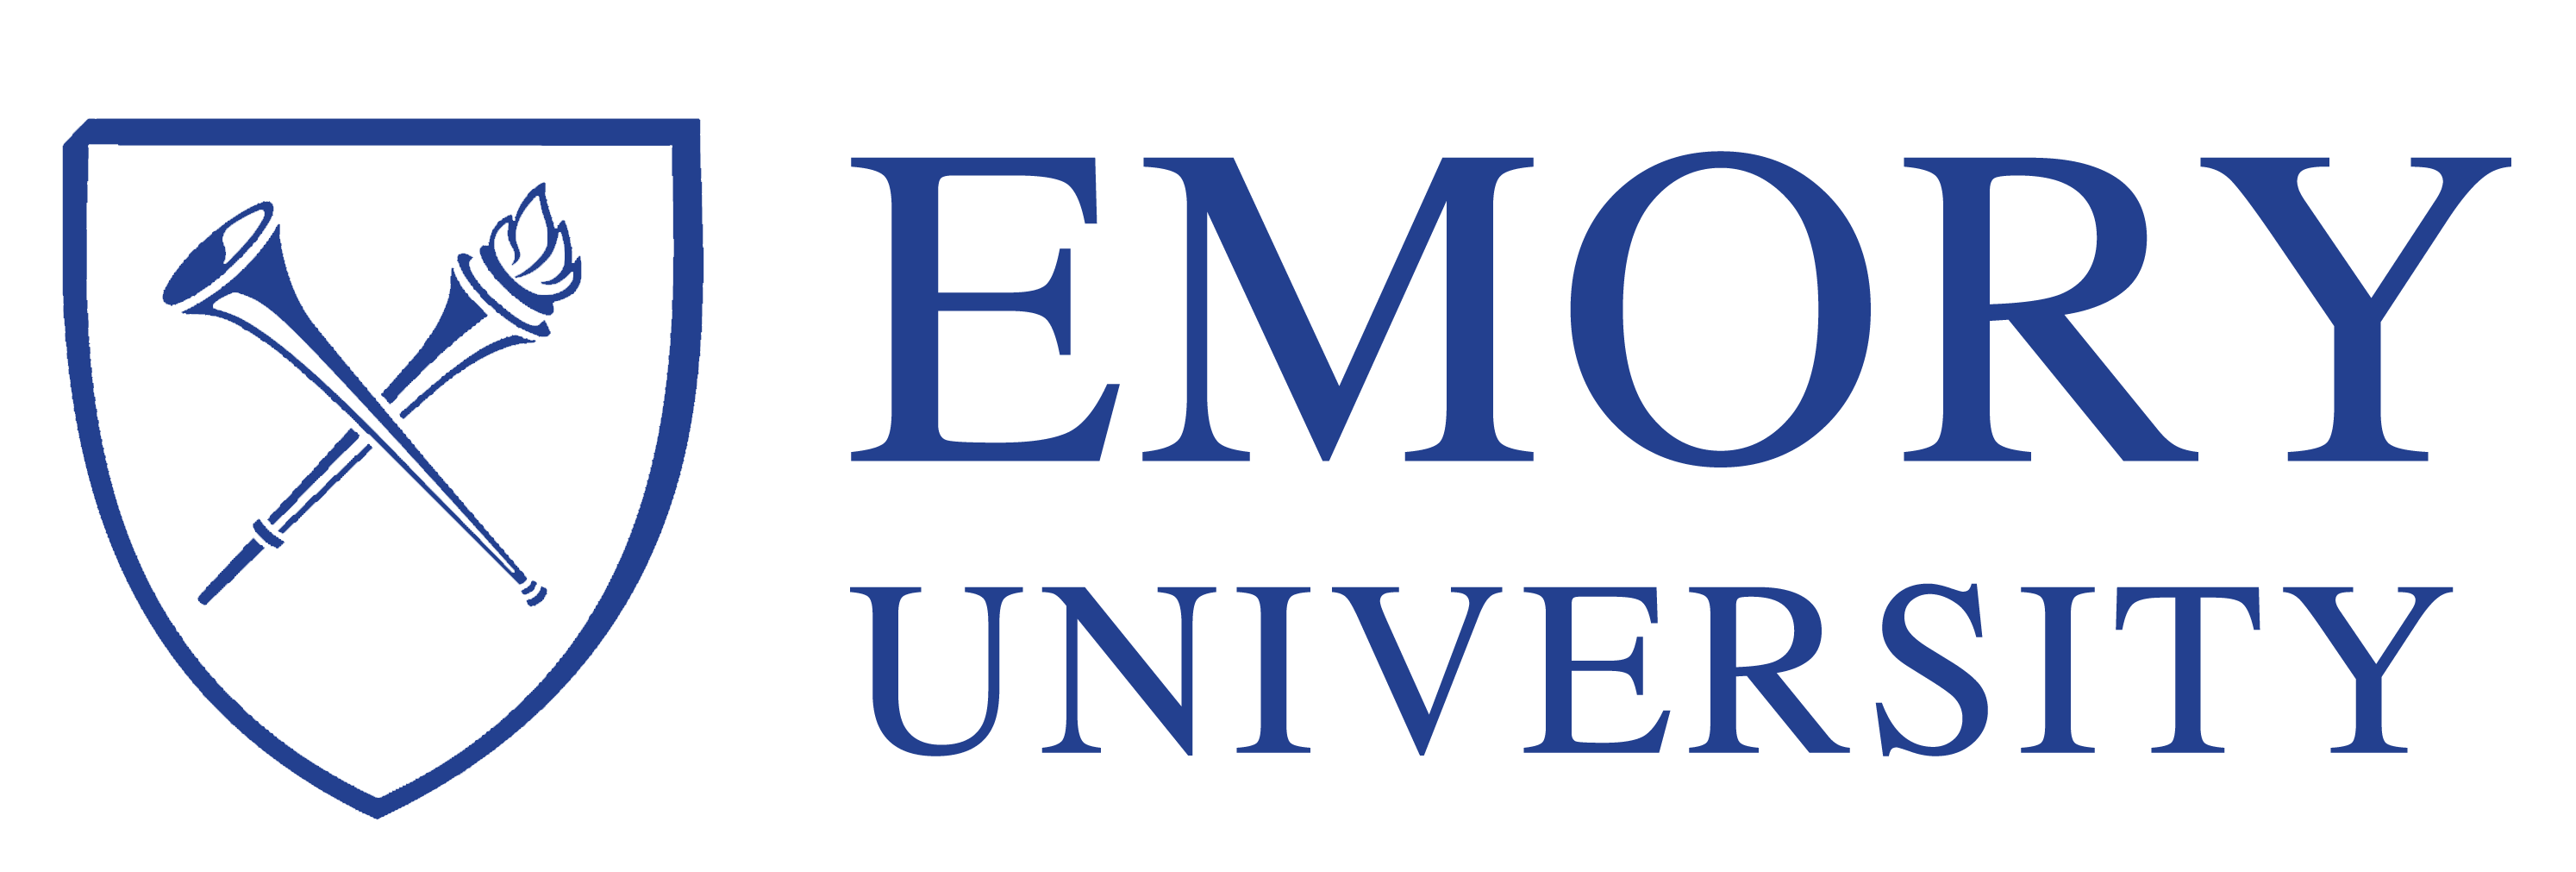 emory university logo - Arogya World